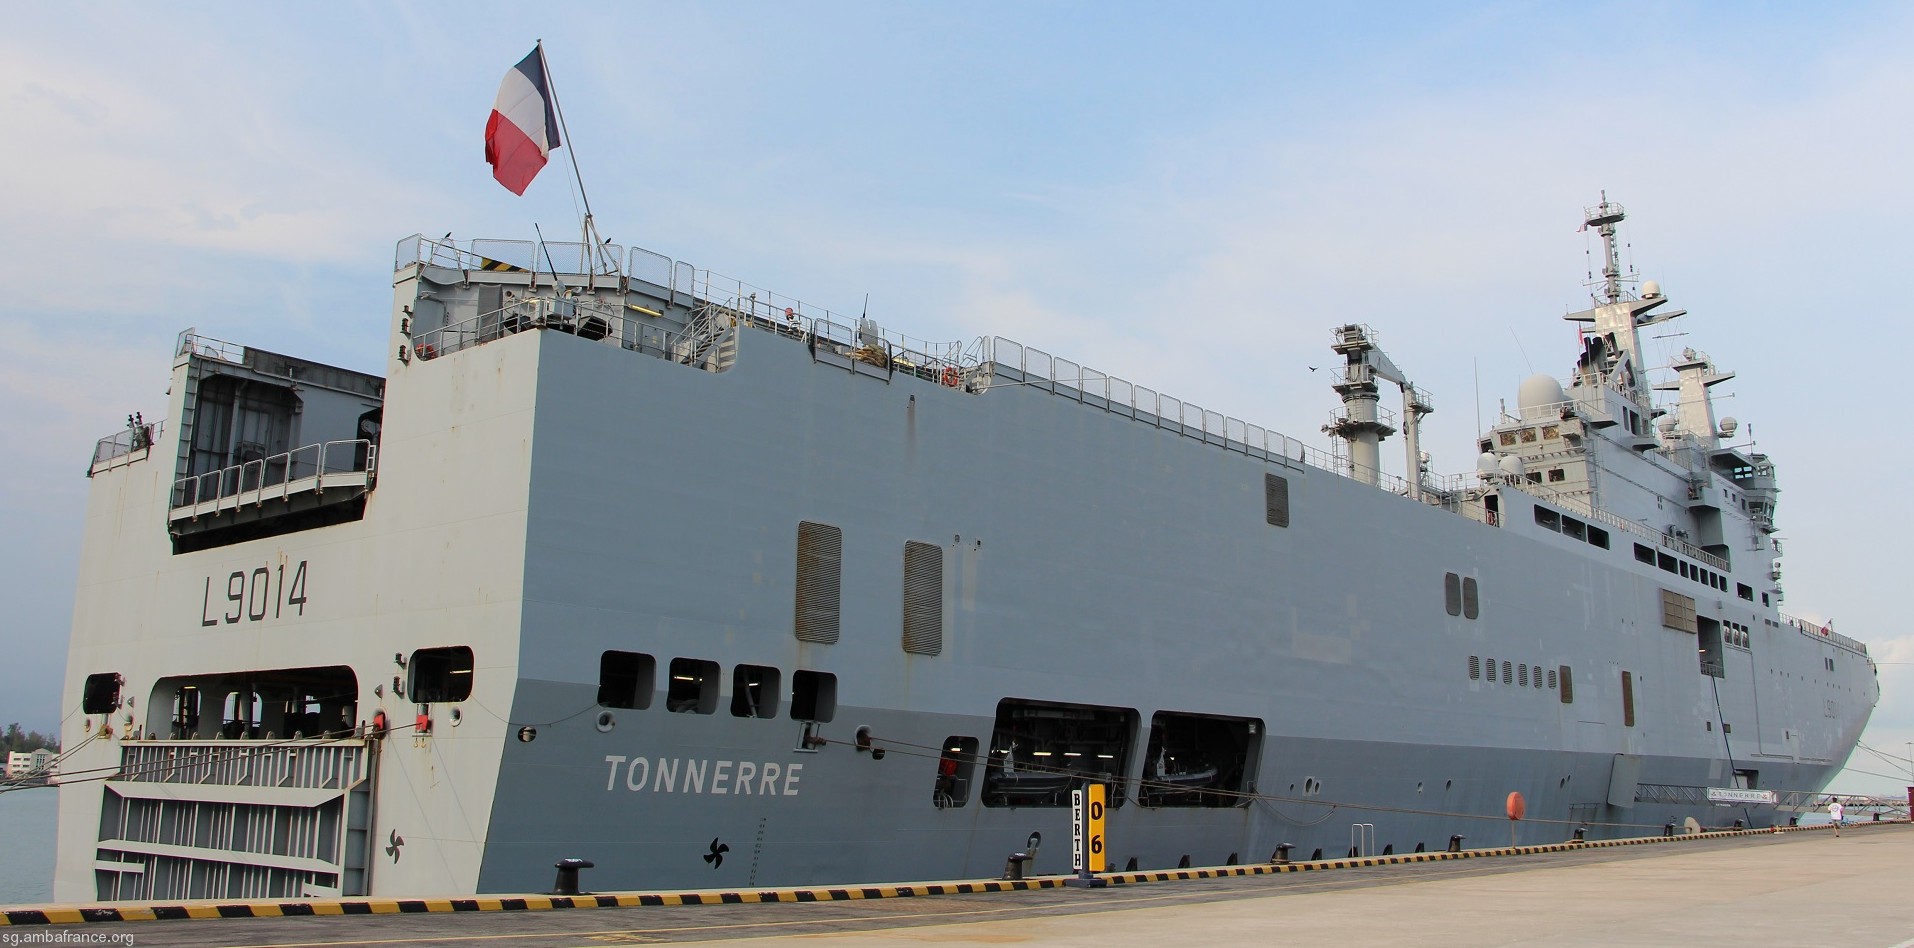 l-9014 fs tonnere mistral class amphibious assault command ship bpc french navy marine nationale 07